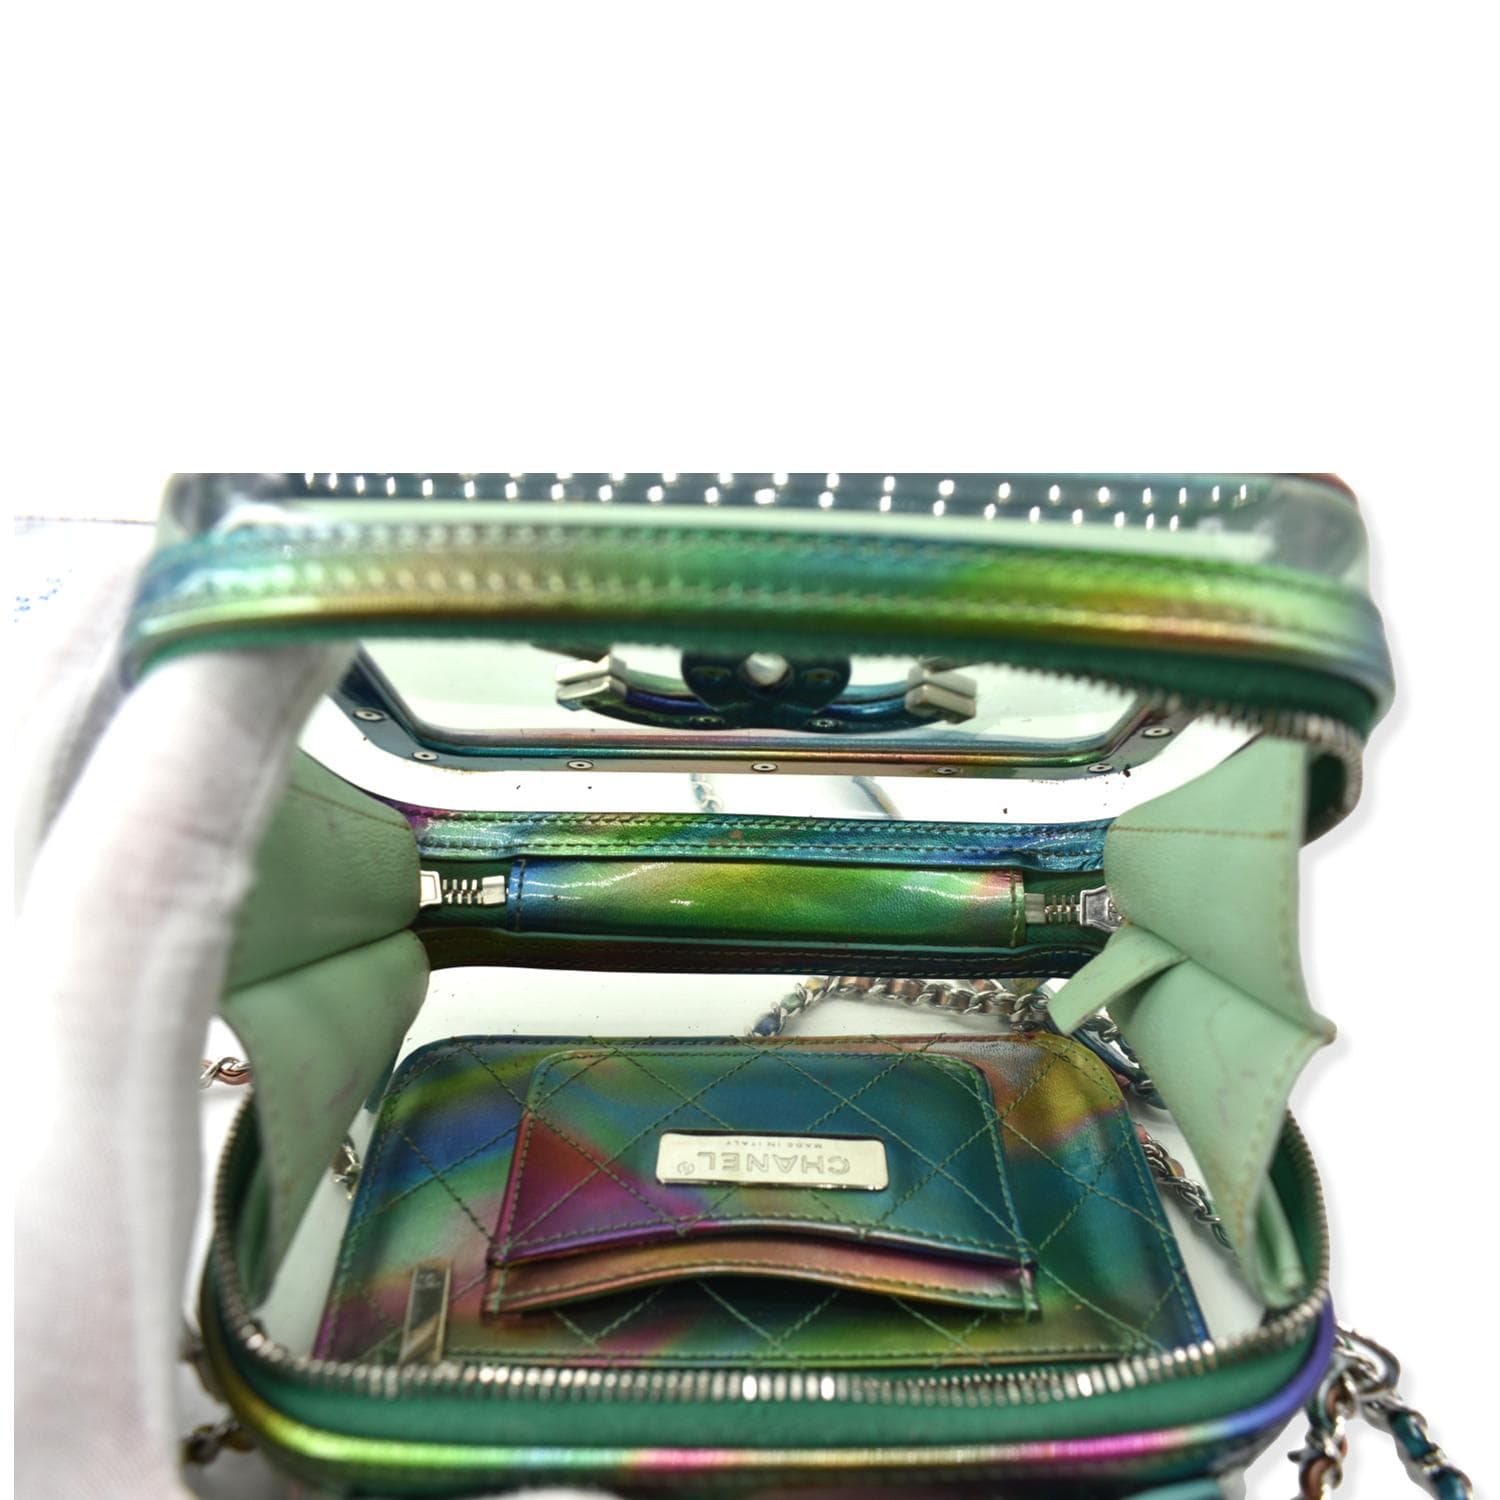 Replica Chanel Mini Messenger Bag Grained Calfskin AS3867 Black